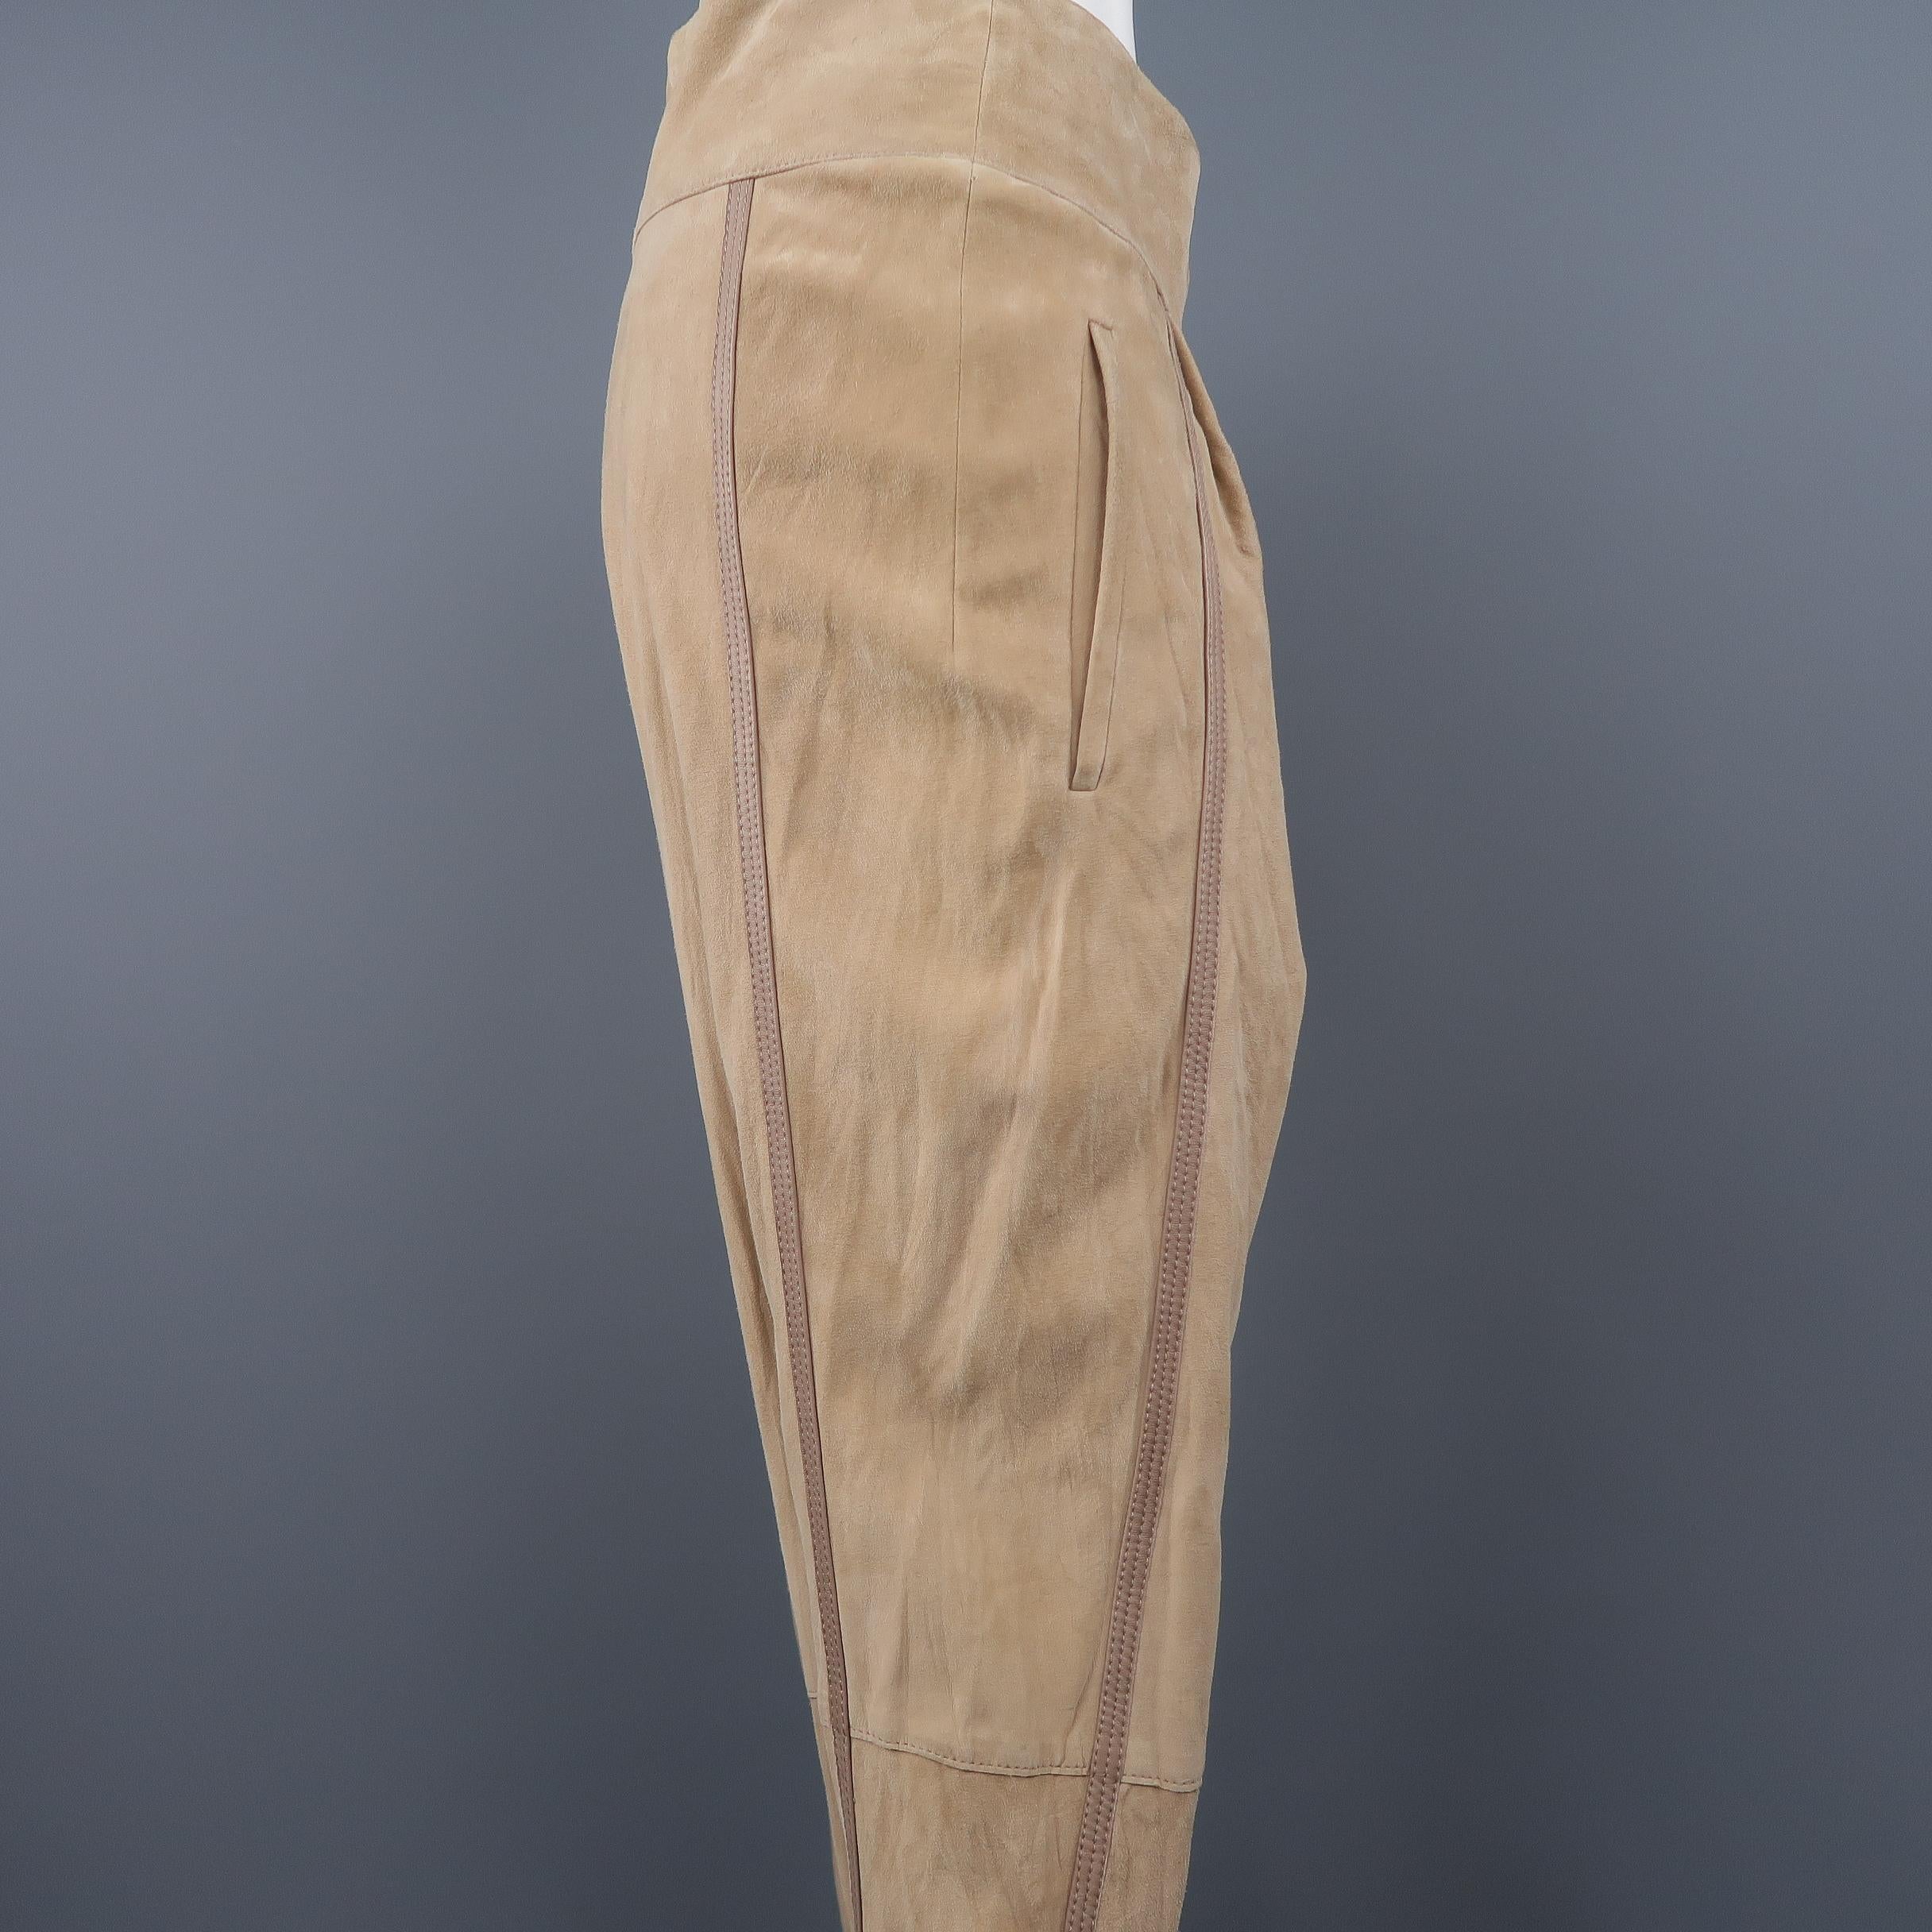 ROBERTO CAVALLI Size 12 Beige Suede Leather Trim Drop Crotch Pants 3